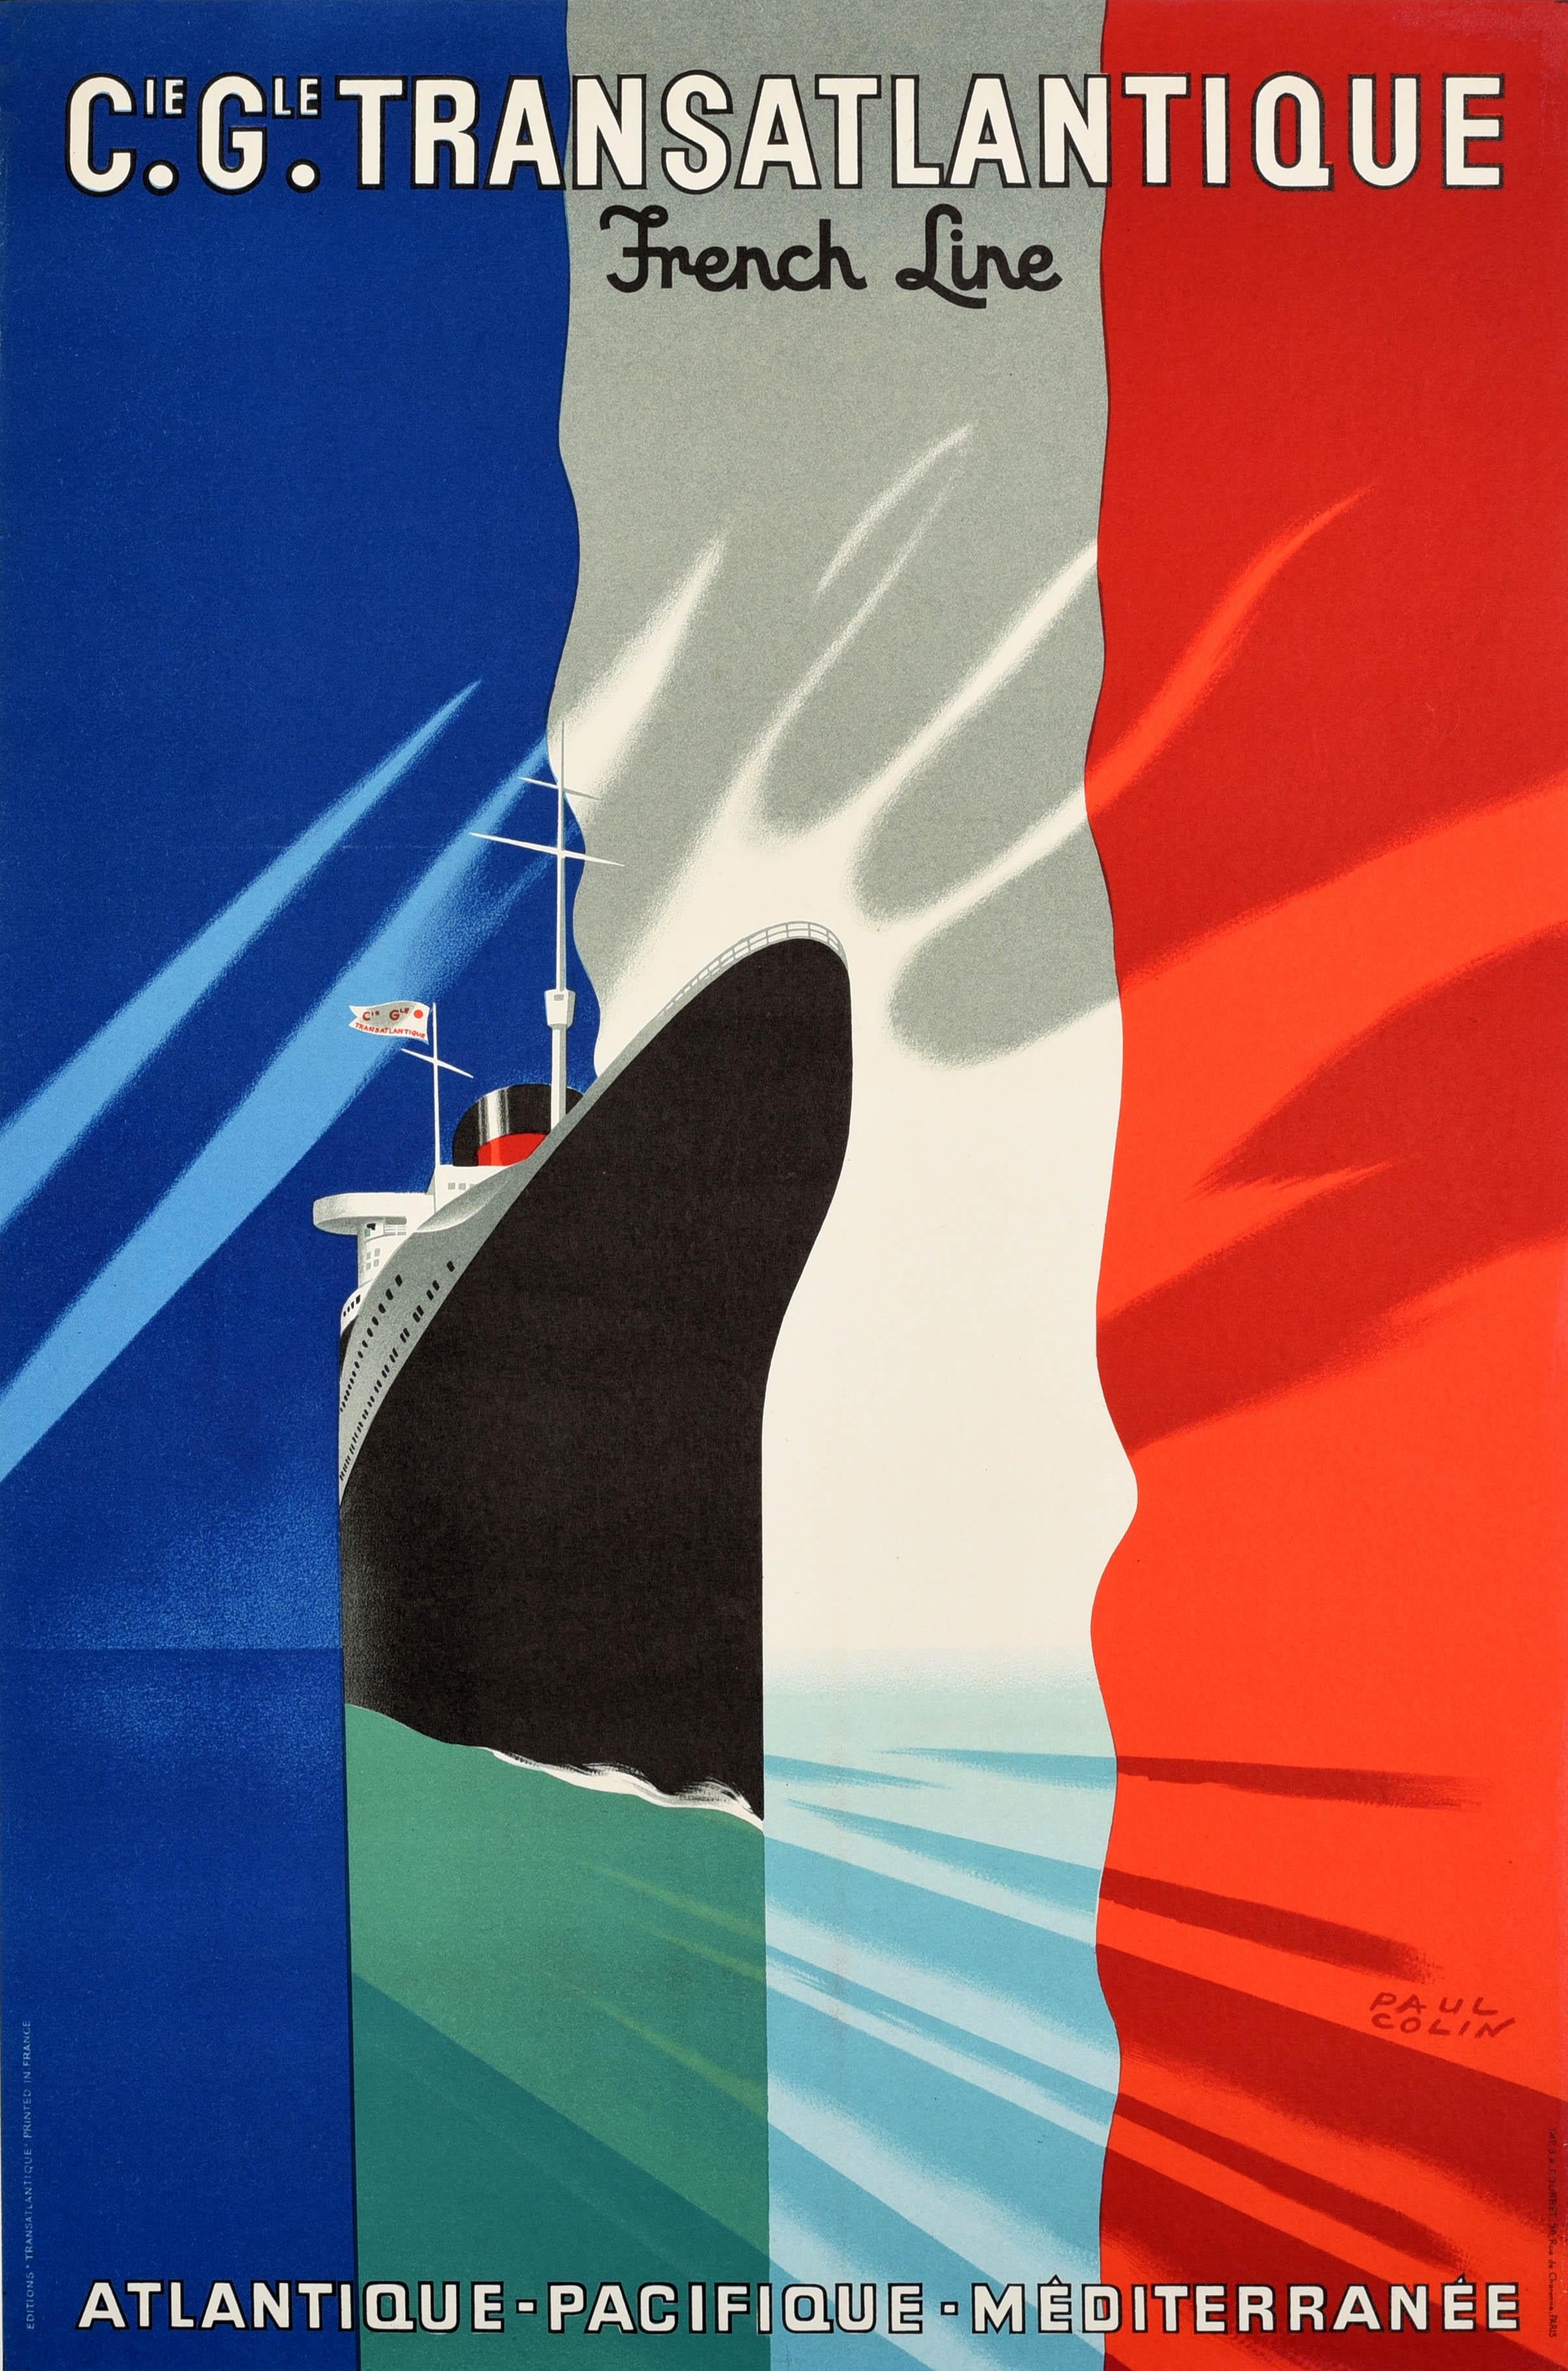 Paul Colin Print - Original Vintage Poster Transatlantique French Line Ocean Liner Cruise Travel 